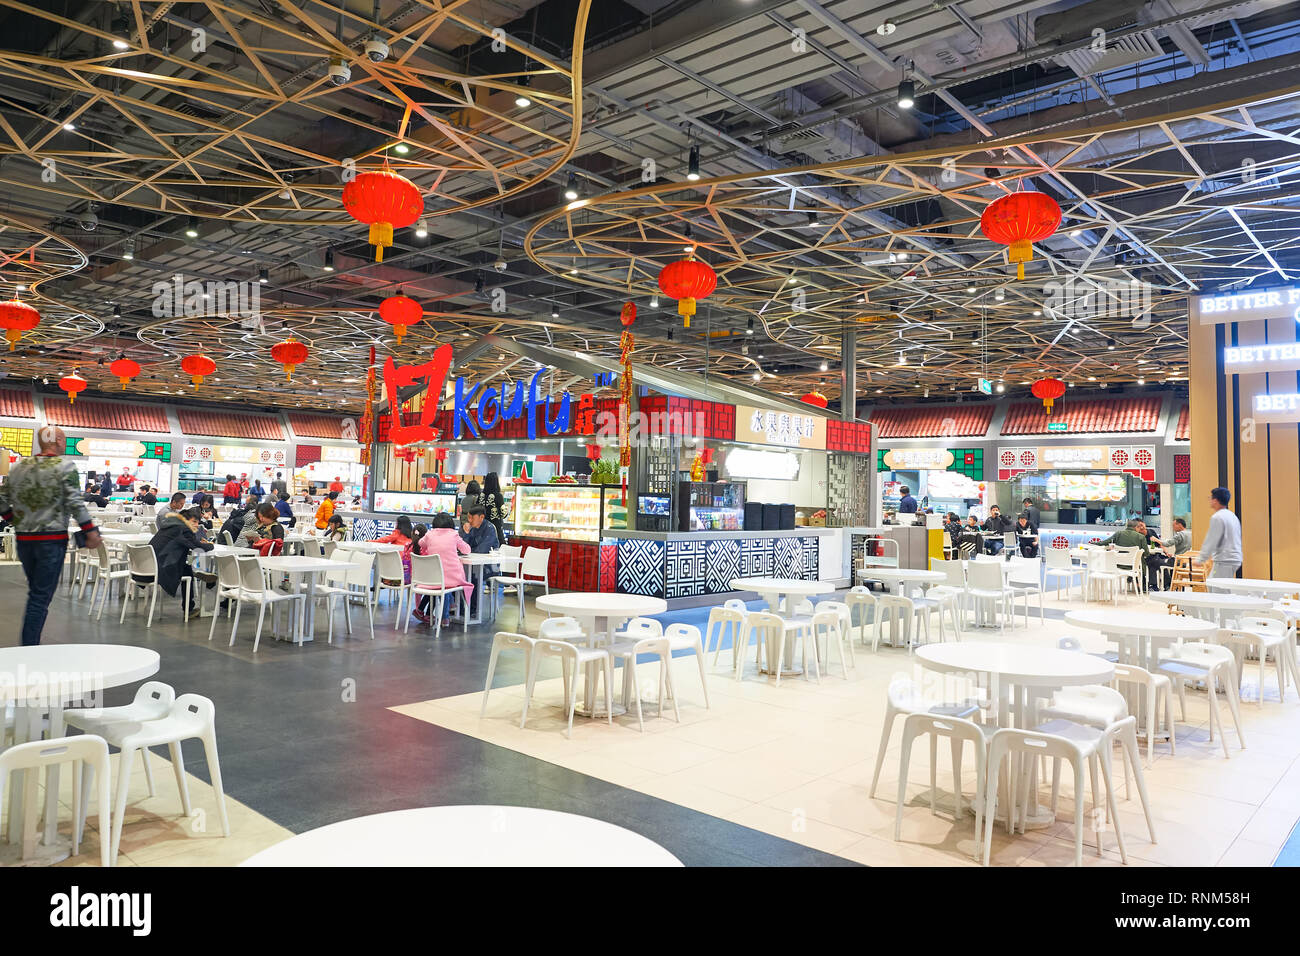 MACAO, CHINA - 16. FEBRUAR 2016: foodcourt im Sands Cotai Central. Sands Cotai Central ist ein Casino Resort am Cotai Strip, Macau, China. Stockfoto